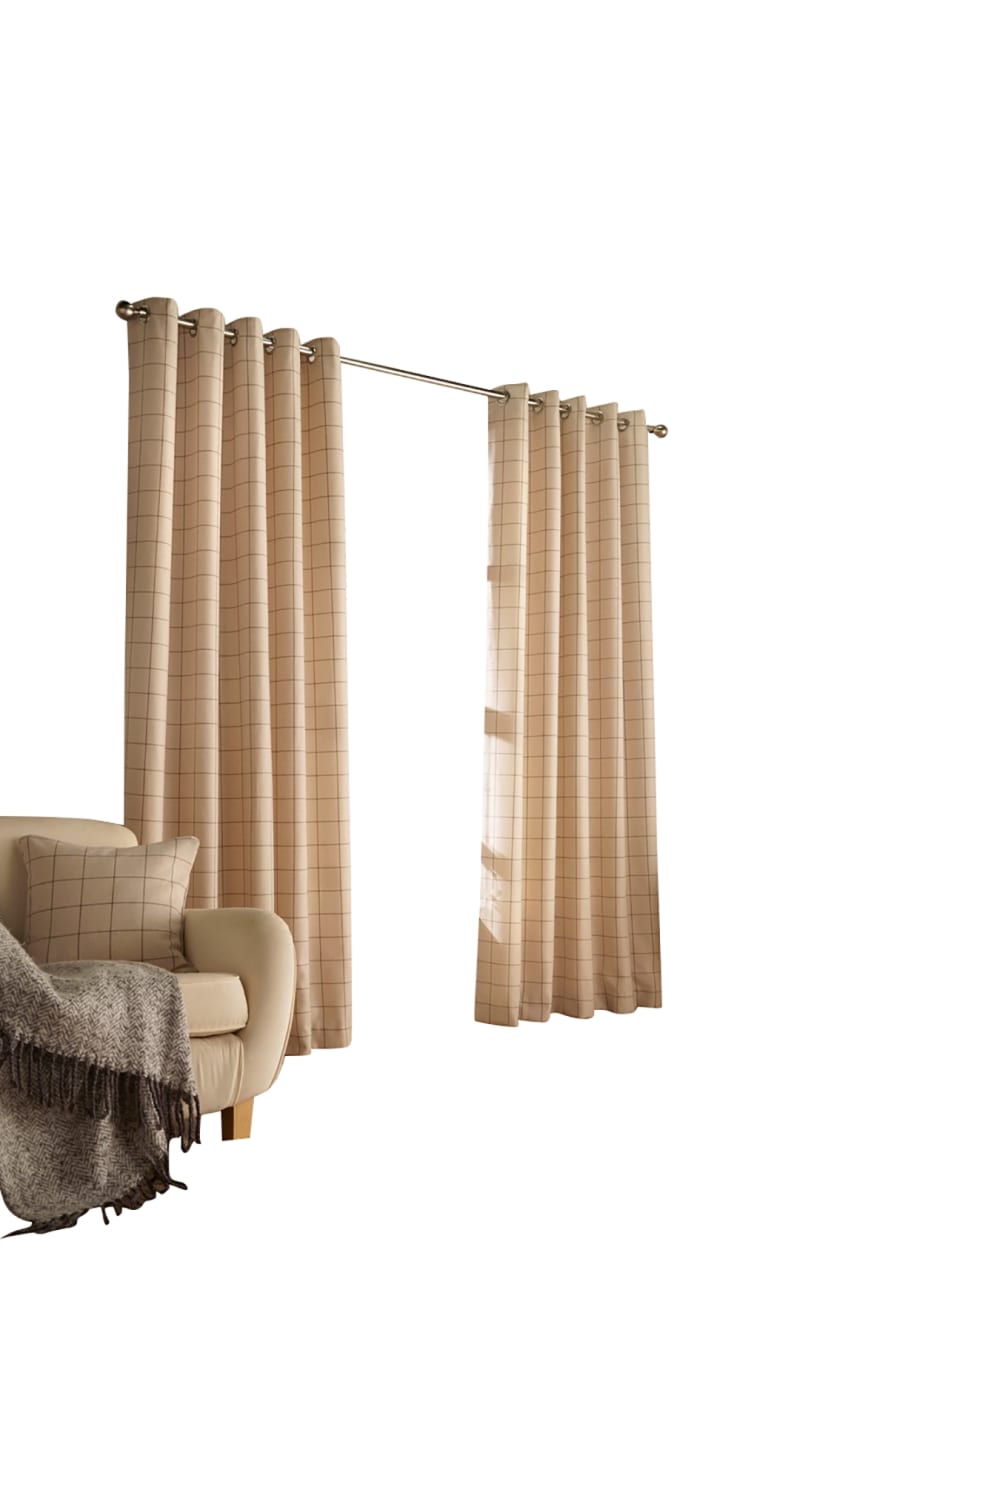 Furn Ellis Ringtop Eyelet Curtains (Natural) (90 x 72 in)